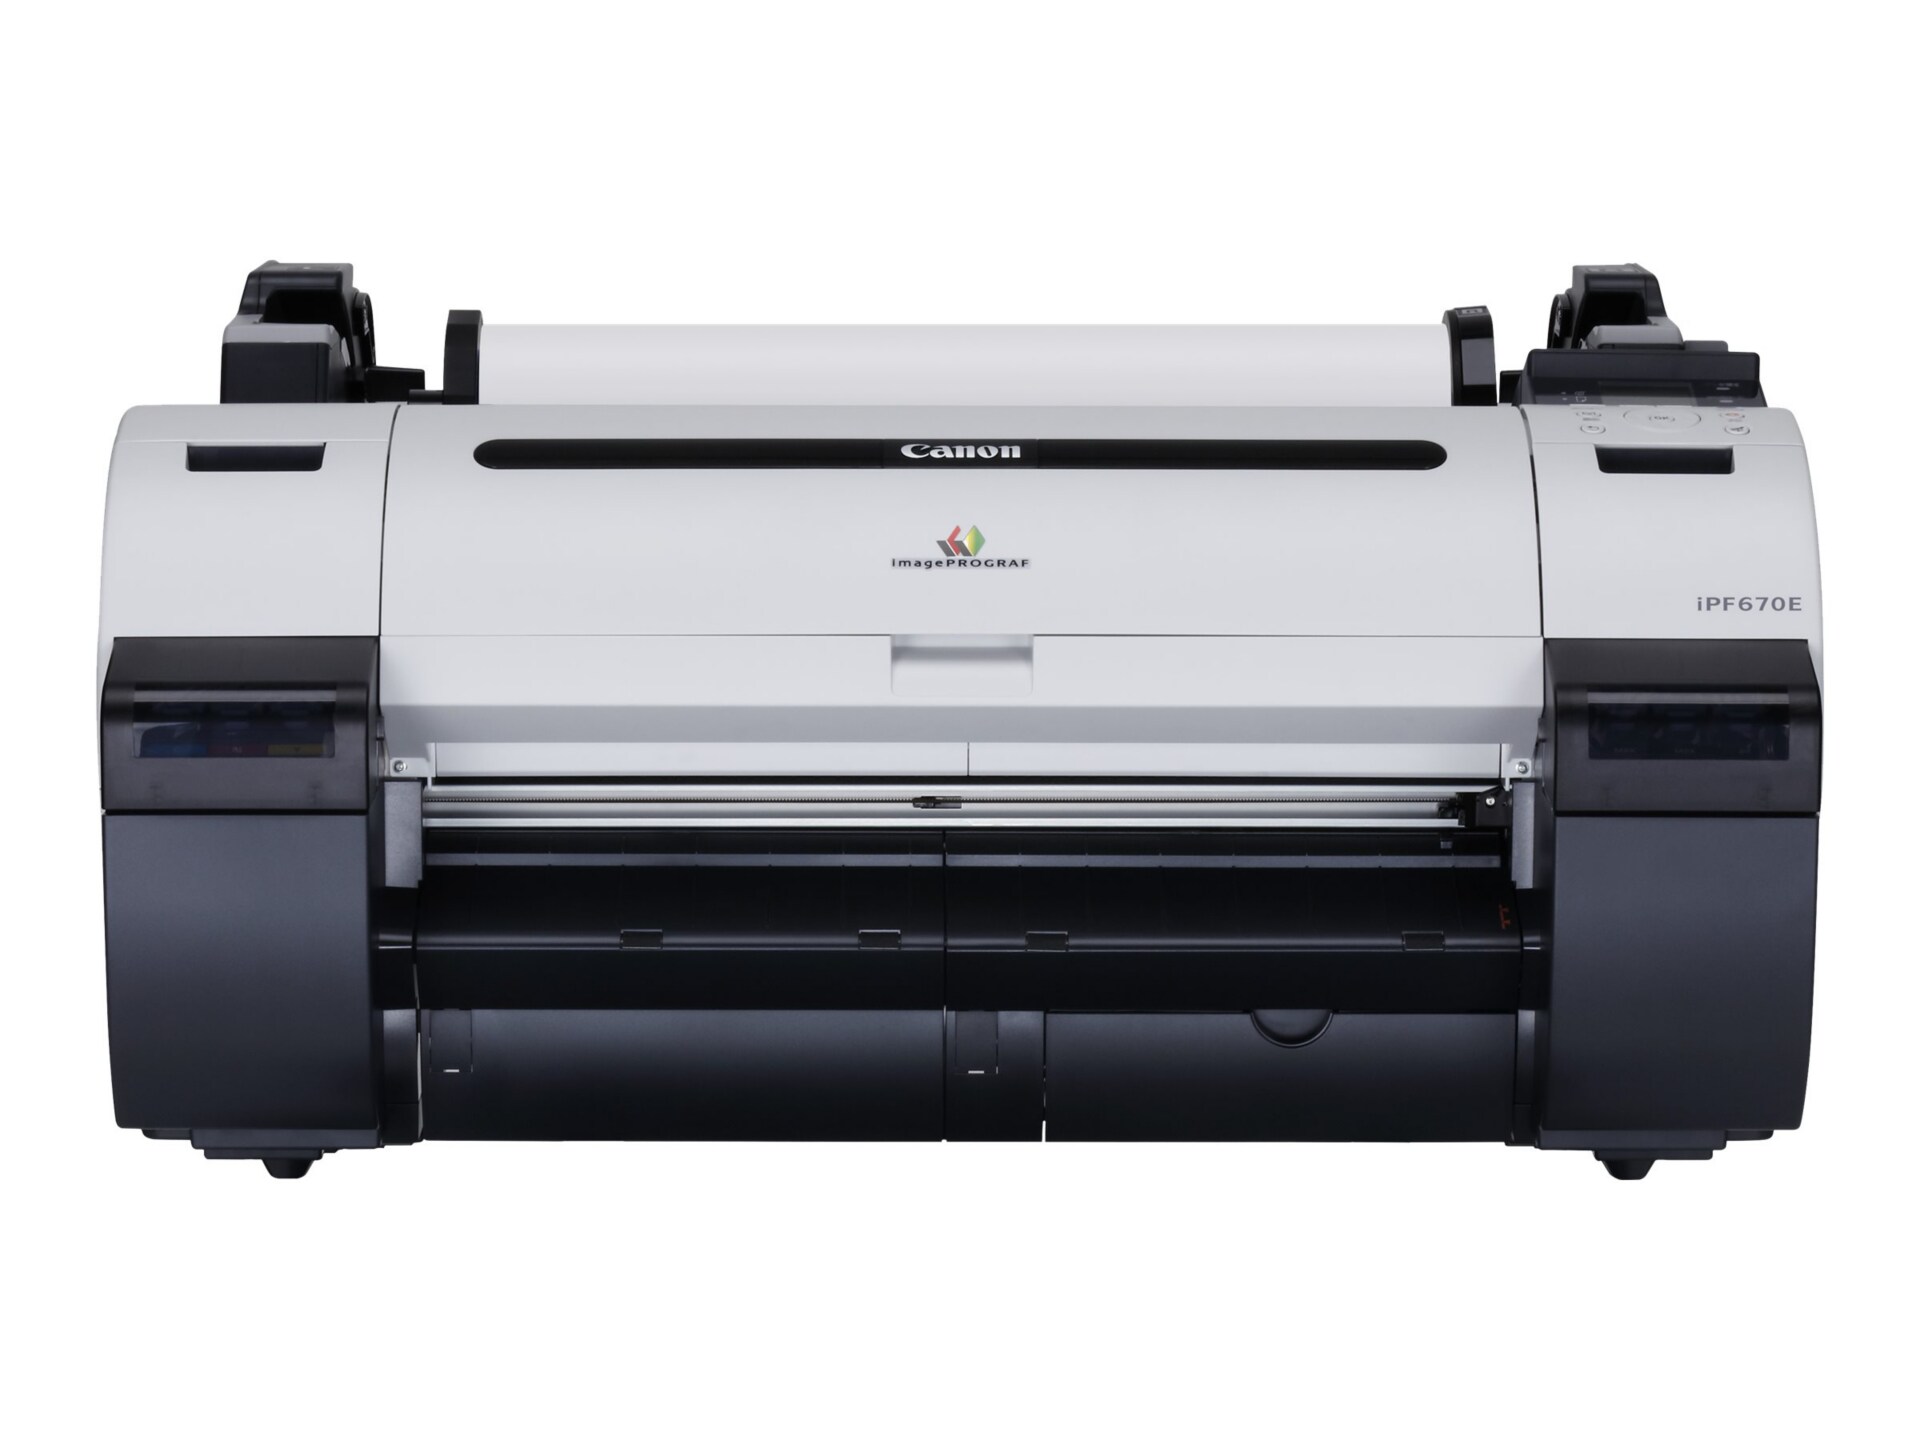 Canon imagePROGRAF iPF670E - large-format printer - color - ink-jet